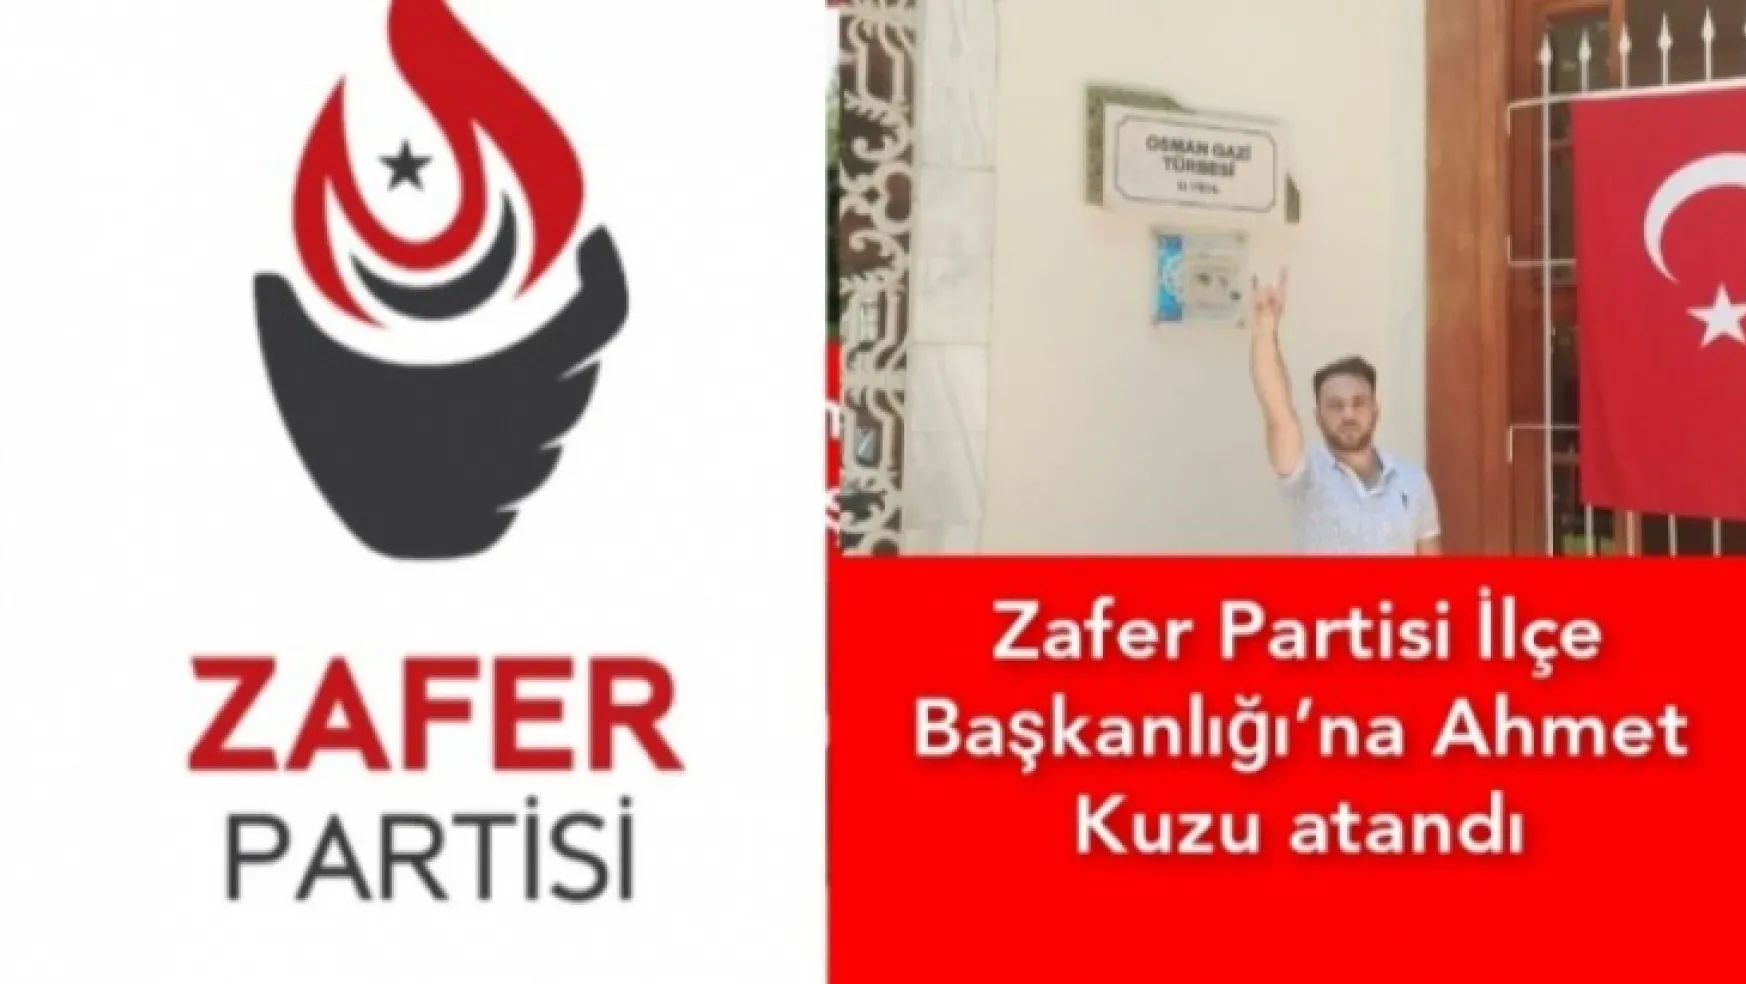 Zafer Partisi İlçe Başkanlığına Ahmet Kuzu atandı